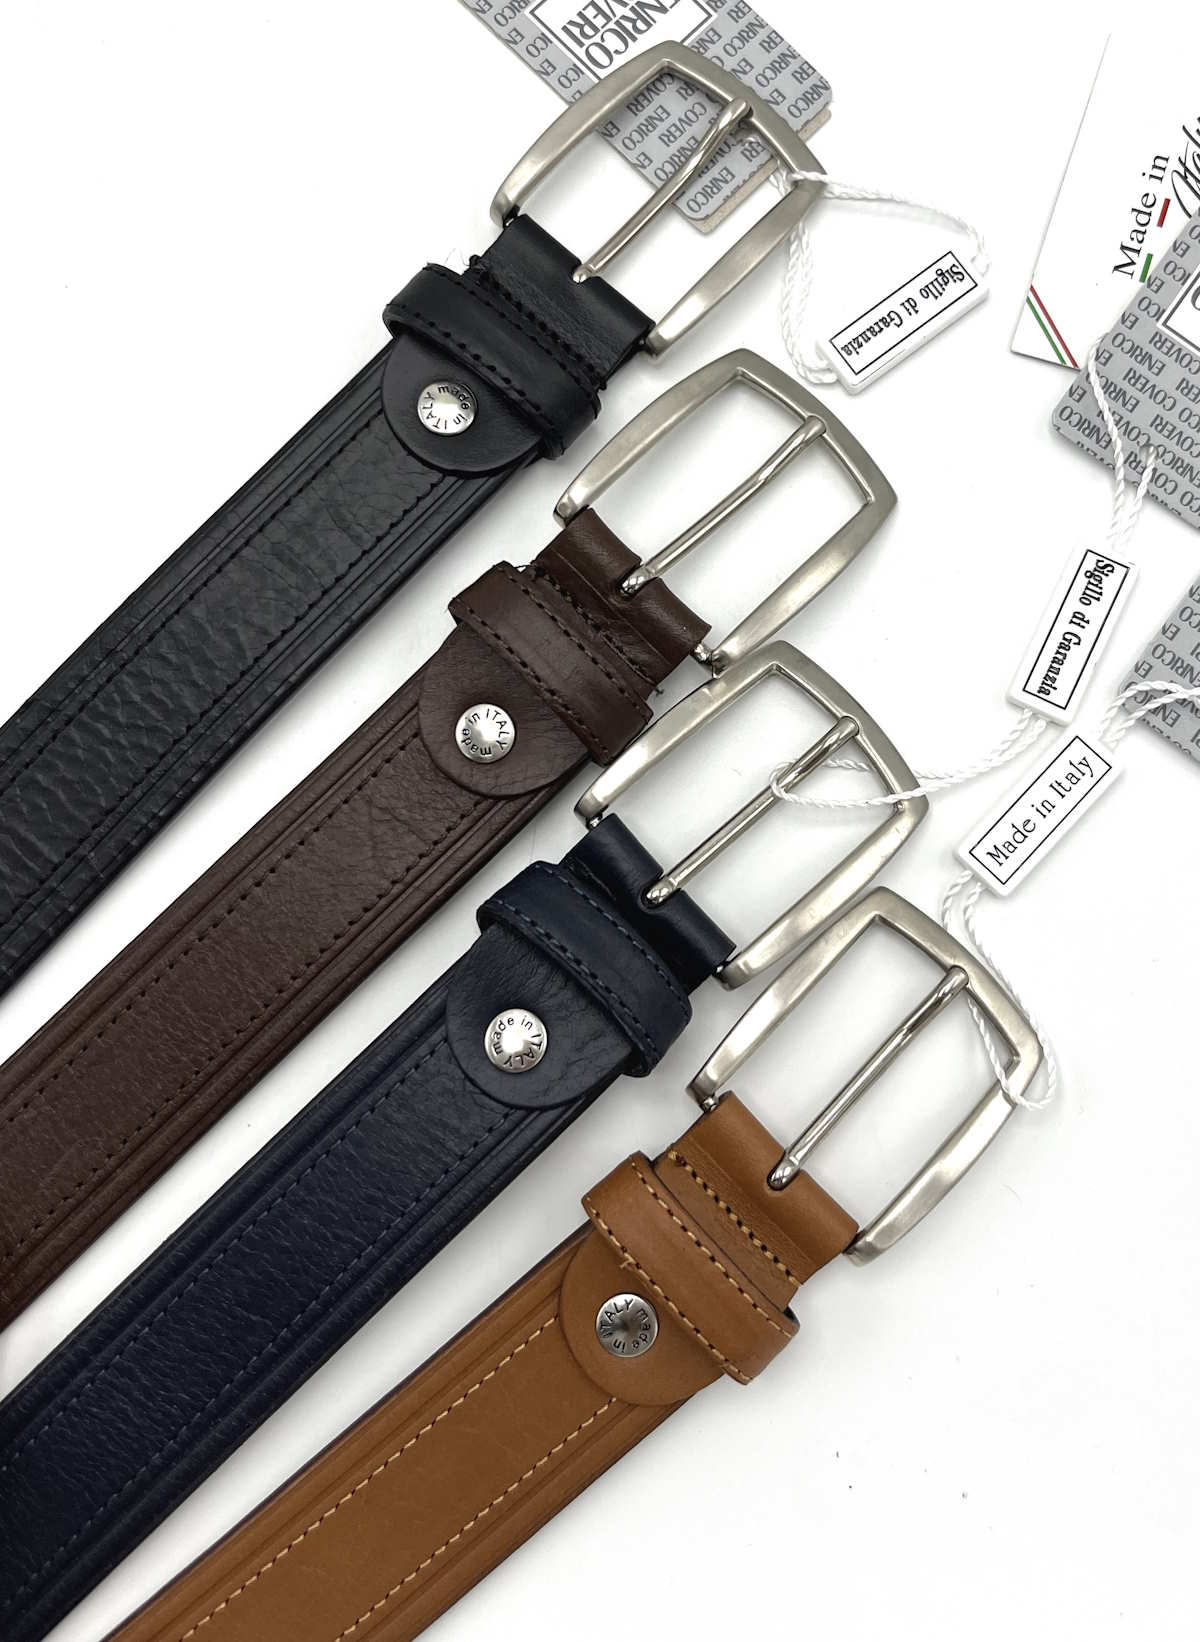 Genuine leather belt, Handmade in Italy, Brand Enrico Coveri, art. EC3503